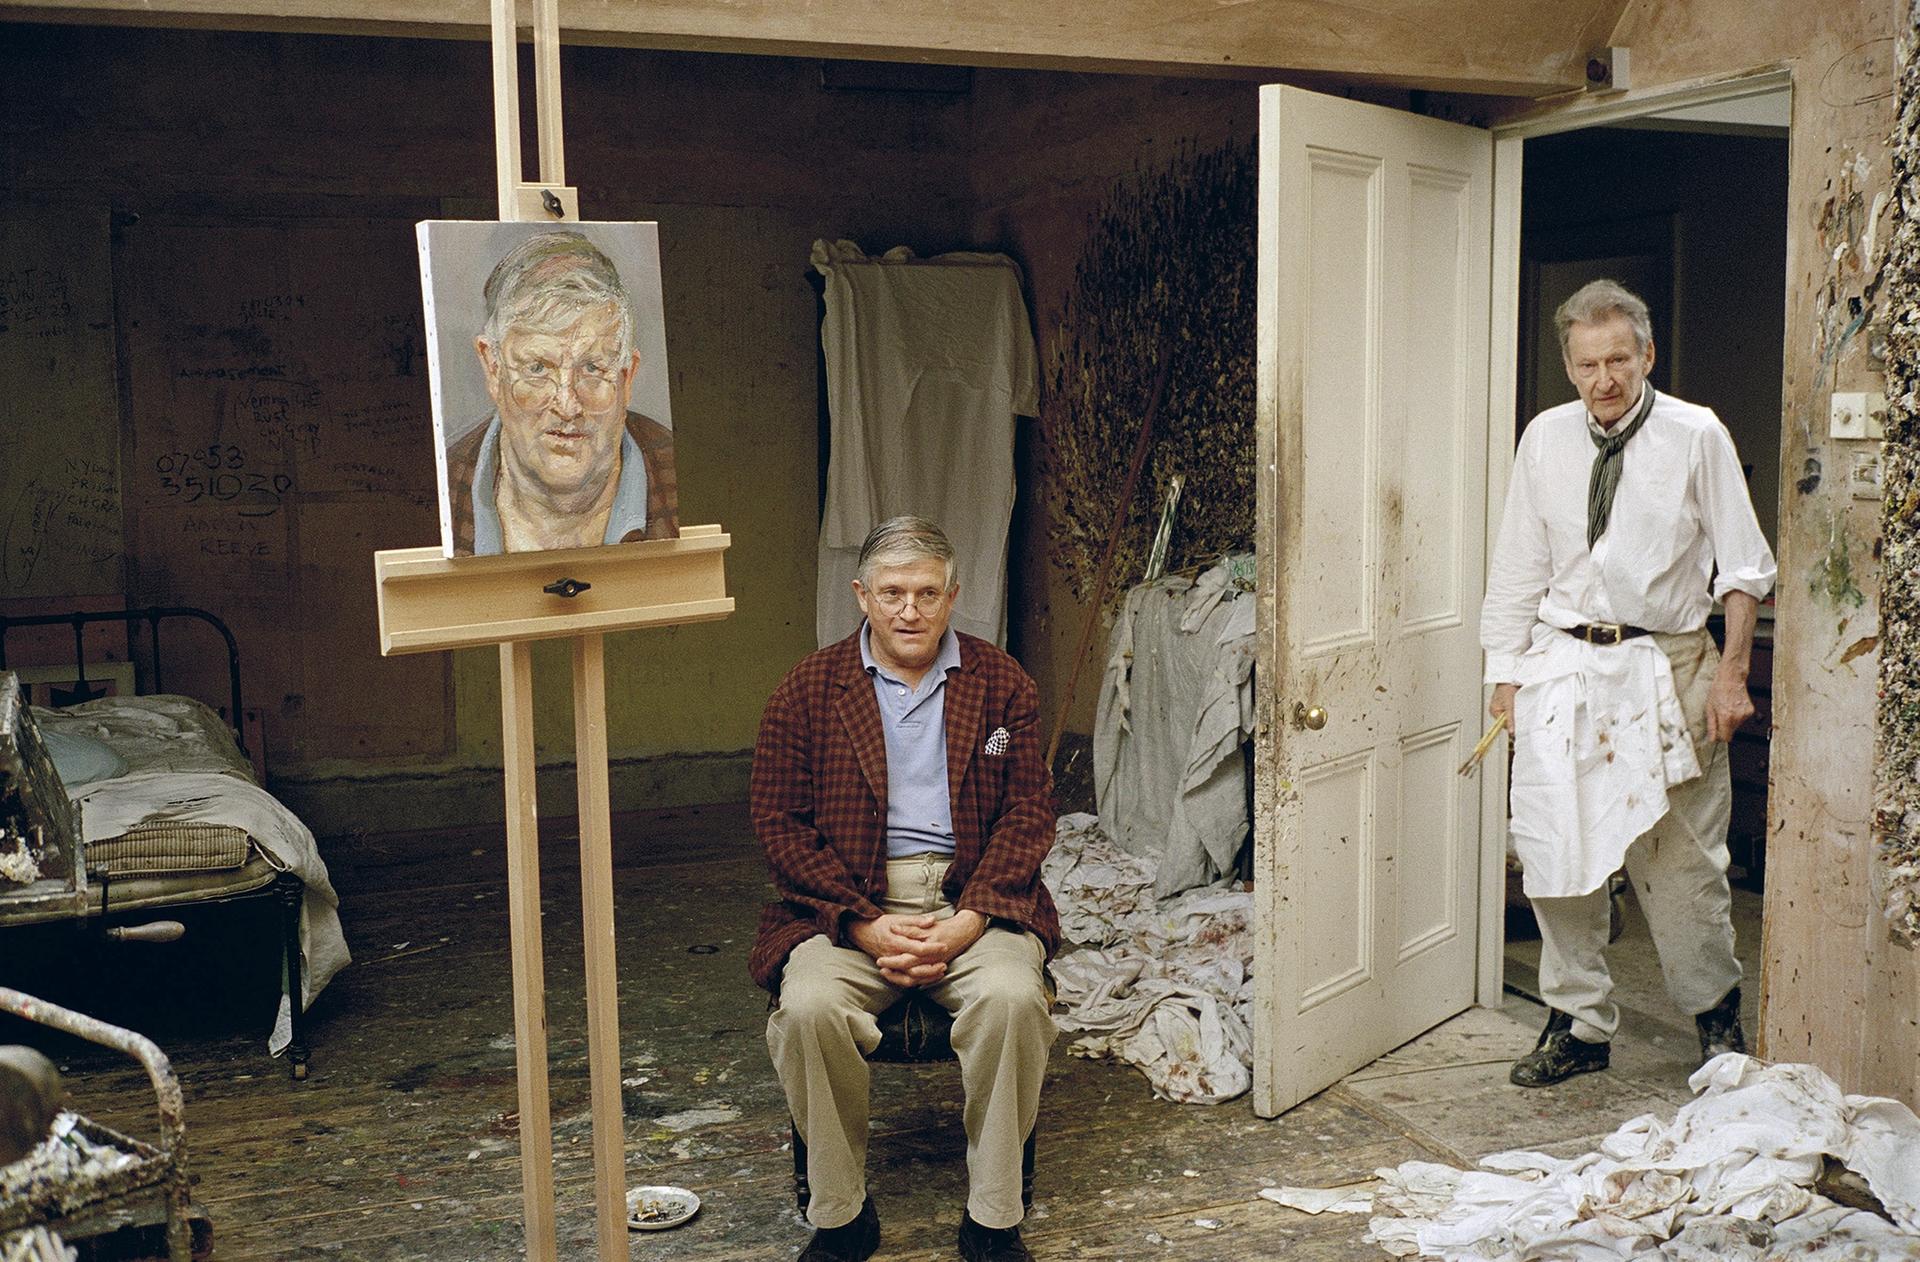 Lucian Freud and David Hockney photographed by David Dawson in 2002 Image/Artwork: © David Dawson / Bridgeman Images